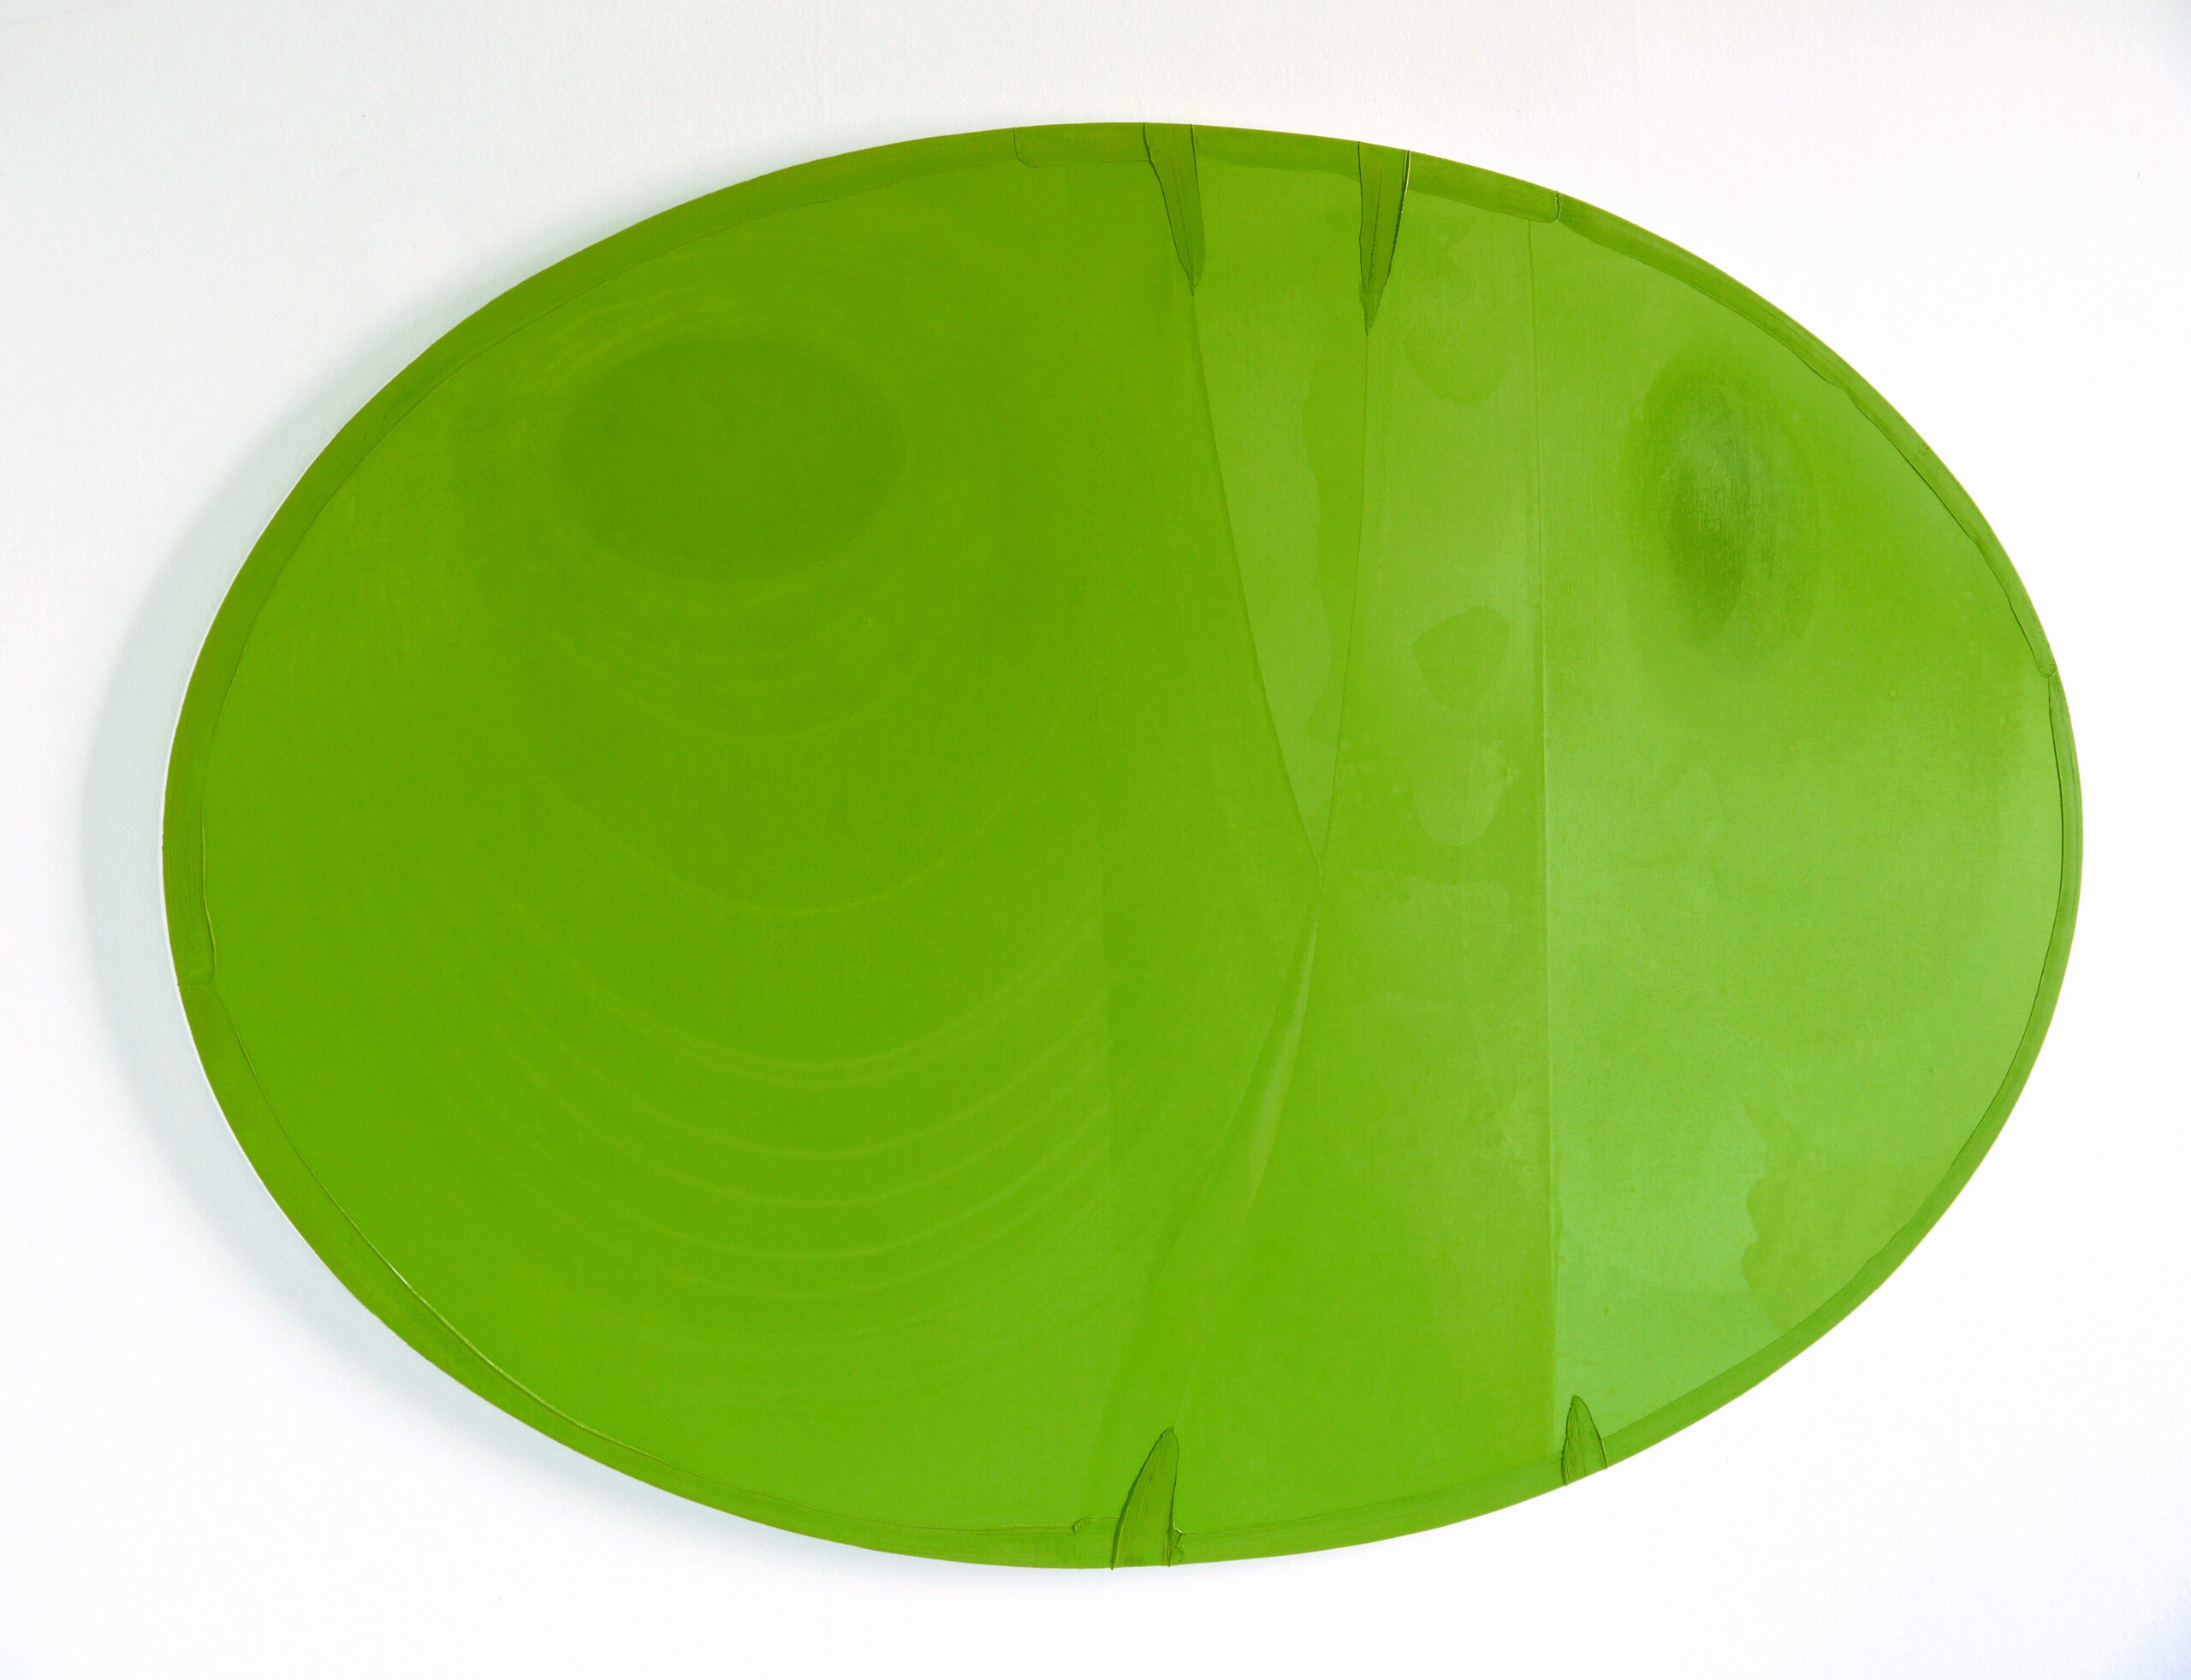 Antonio Catelani - flying kisses (green), 2020 oil on canvas cm 80x120